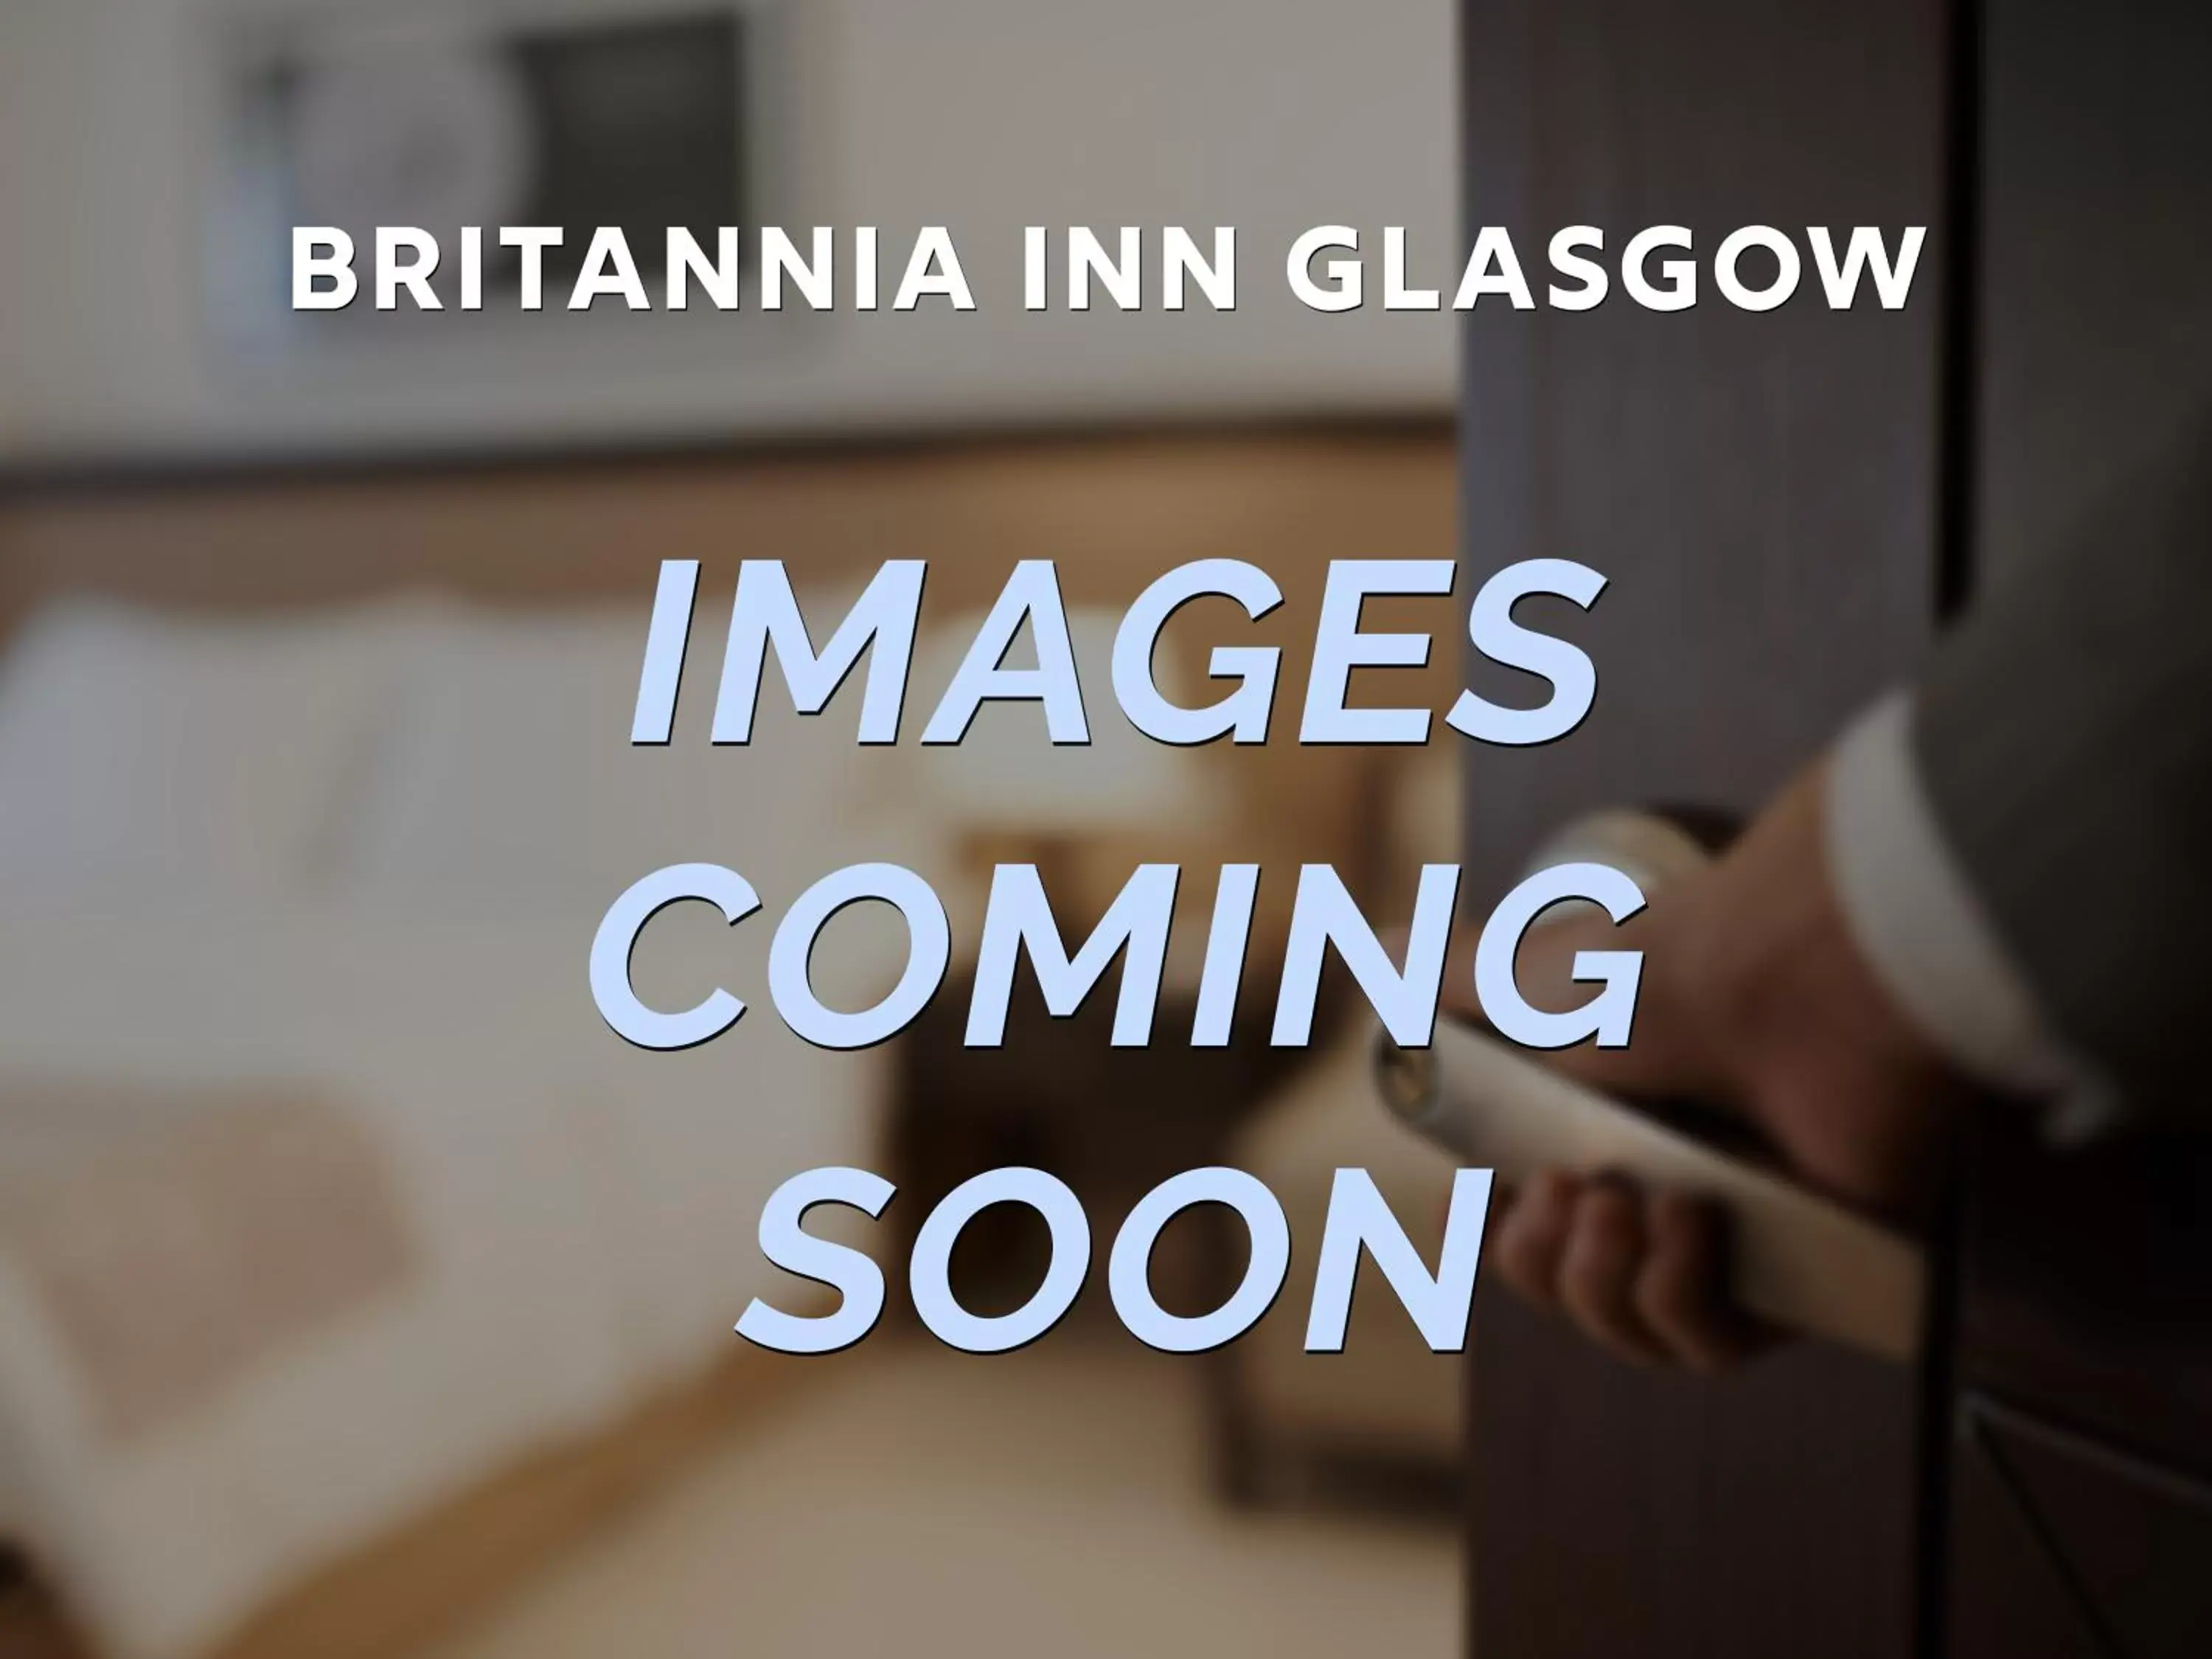 Text overlay in Britannia Inn Glasgow